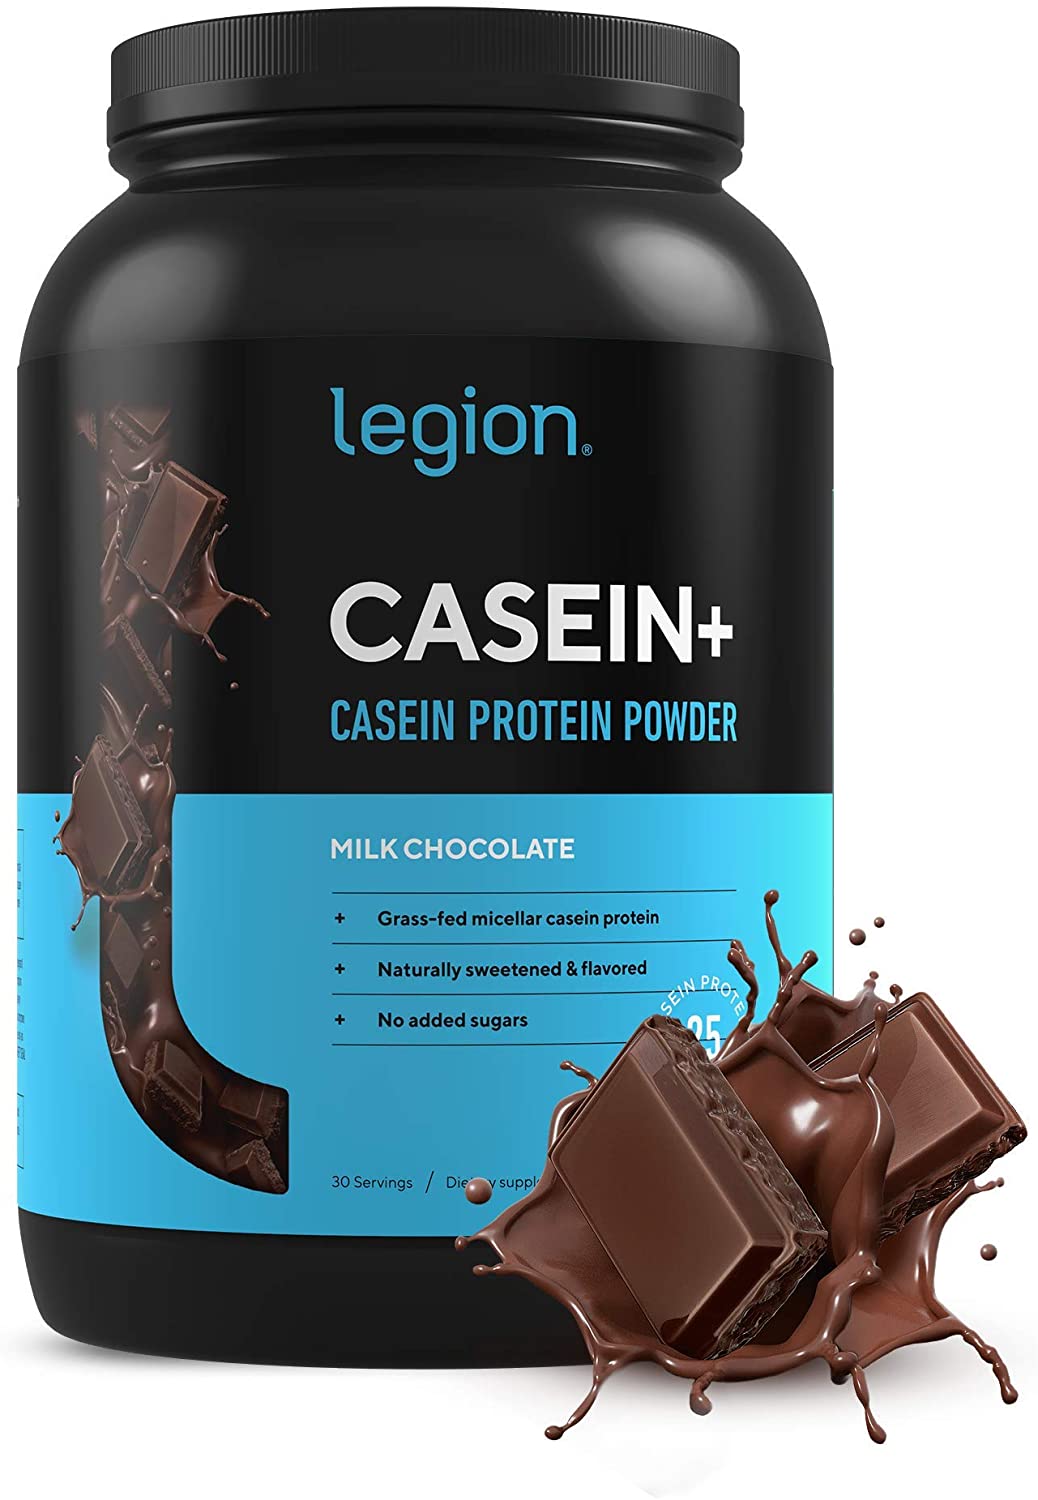 Ranking The Best Casein Protein Of 2021 Body Nutrition 6126